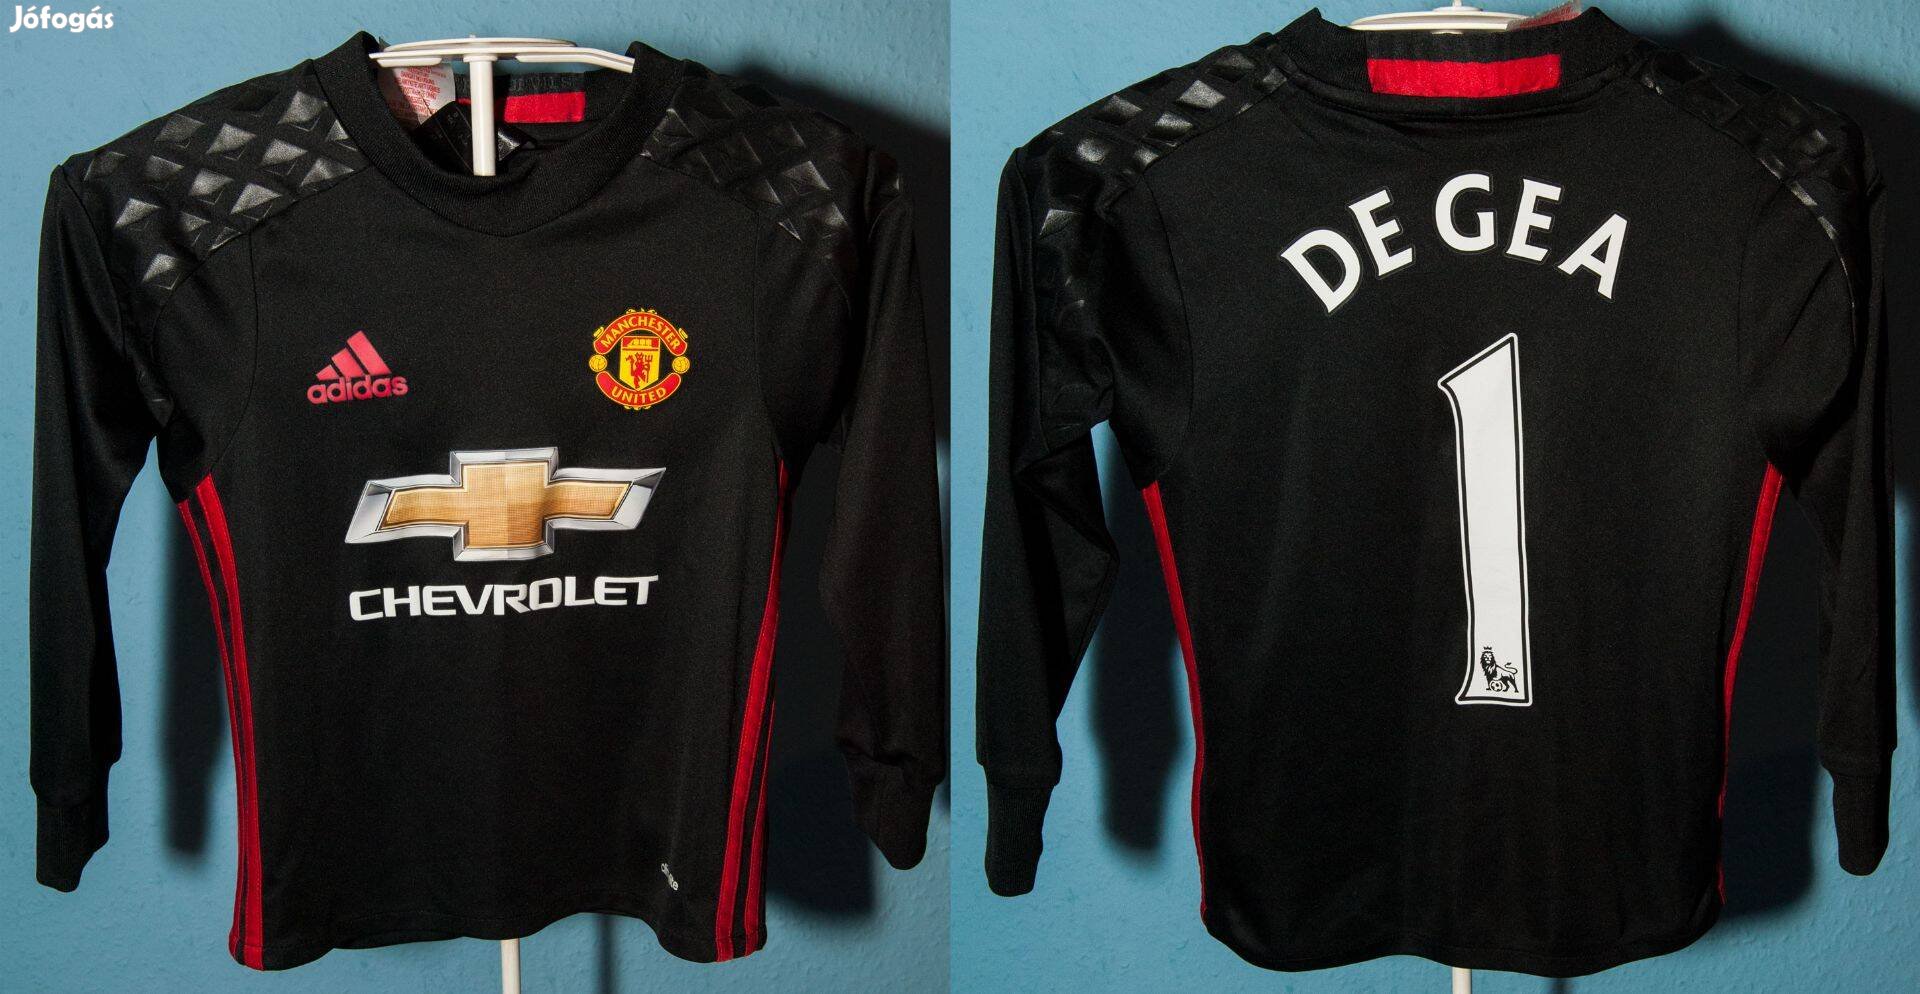 David Degea - Manchester United eredeti adidas gyerek kapusmez